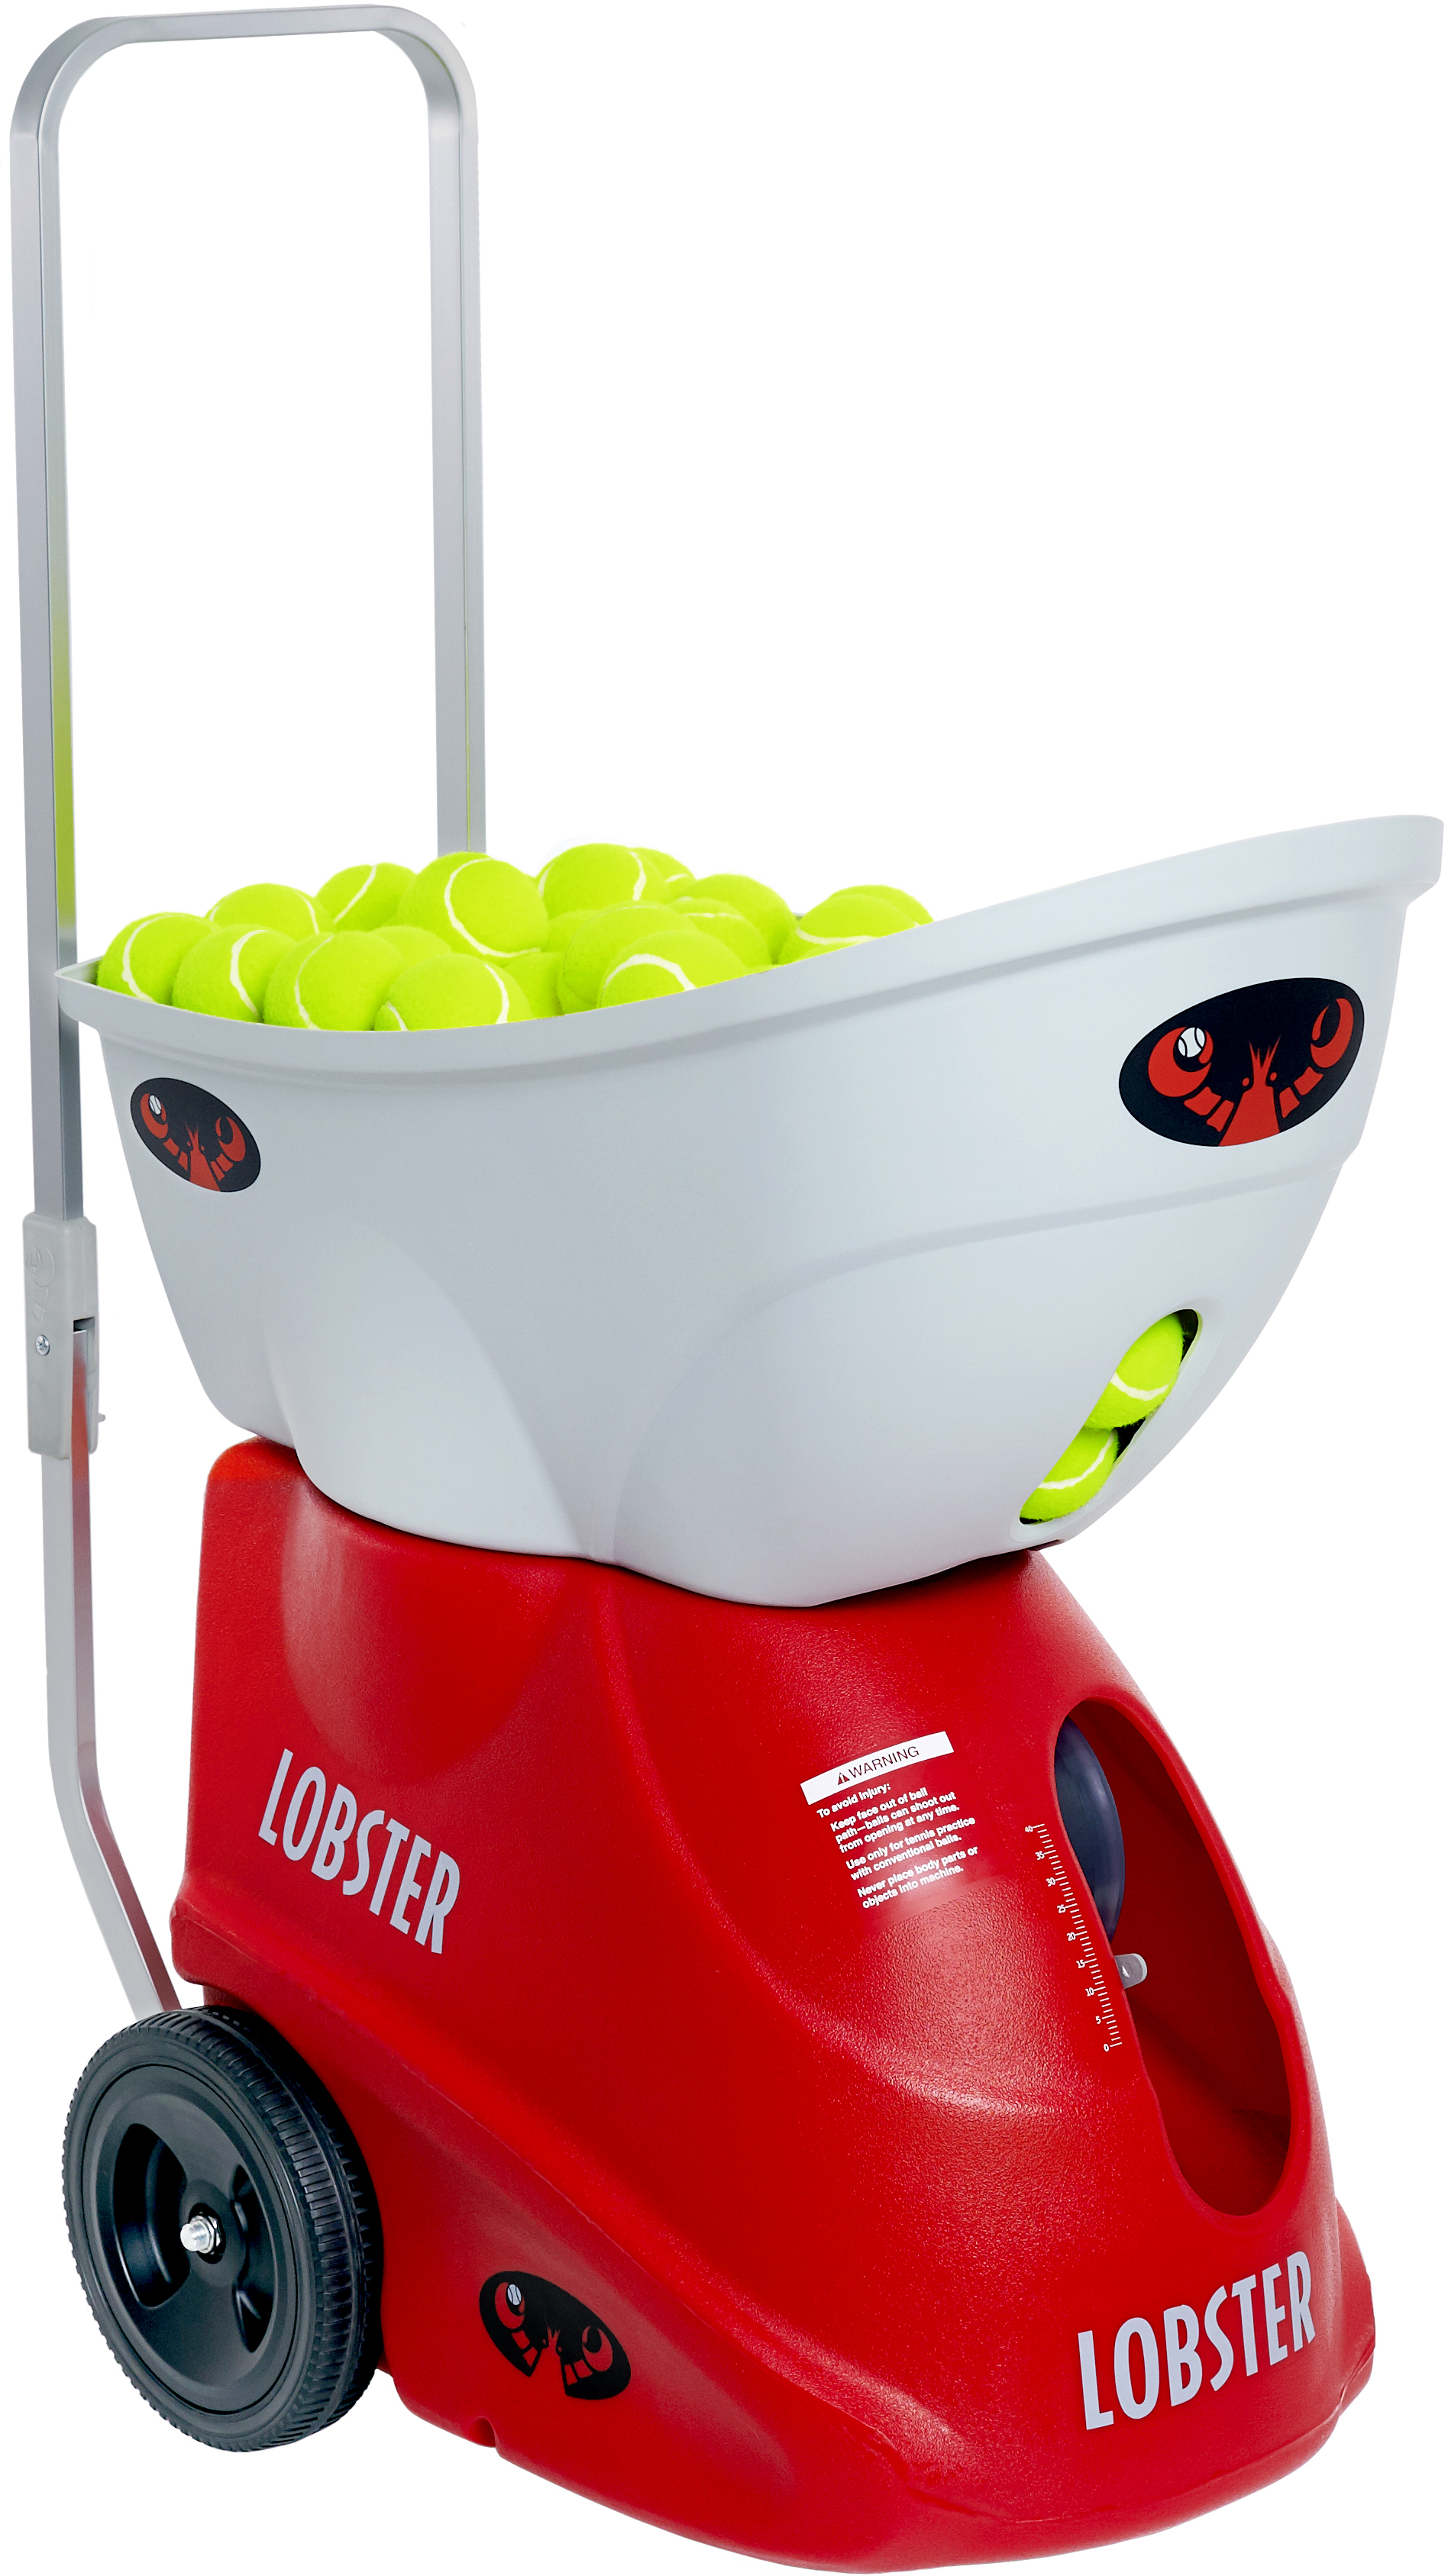 Lobster Tennis Ball Machine For Sale - KibrisPDR